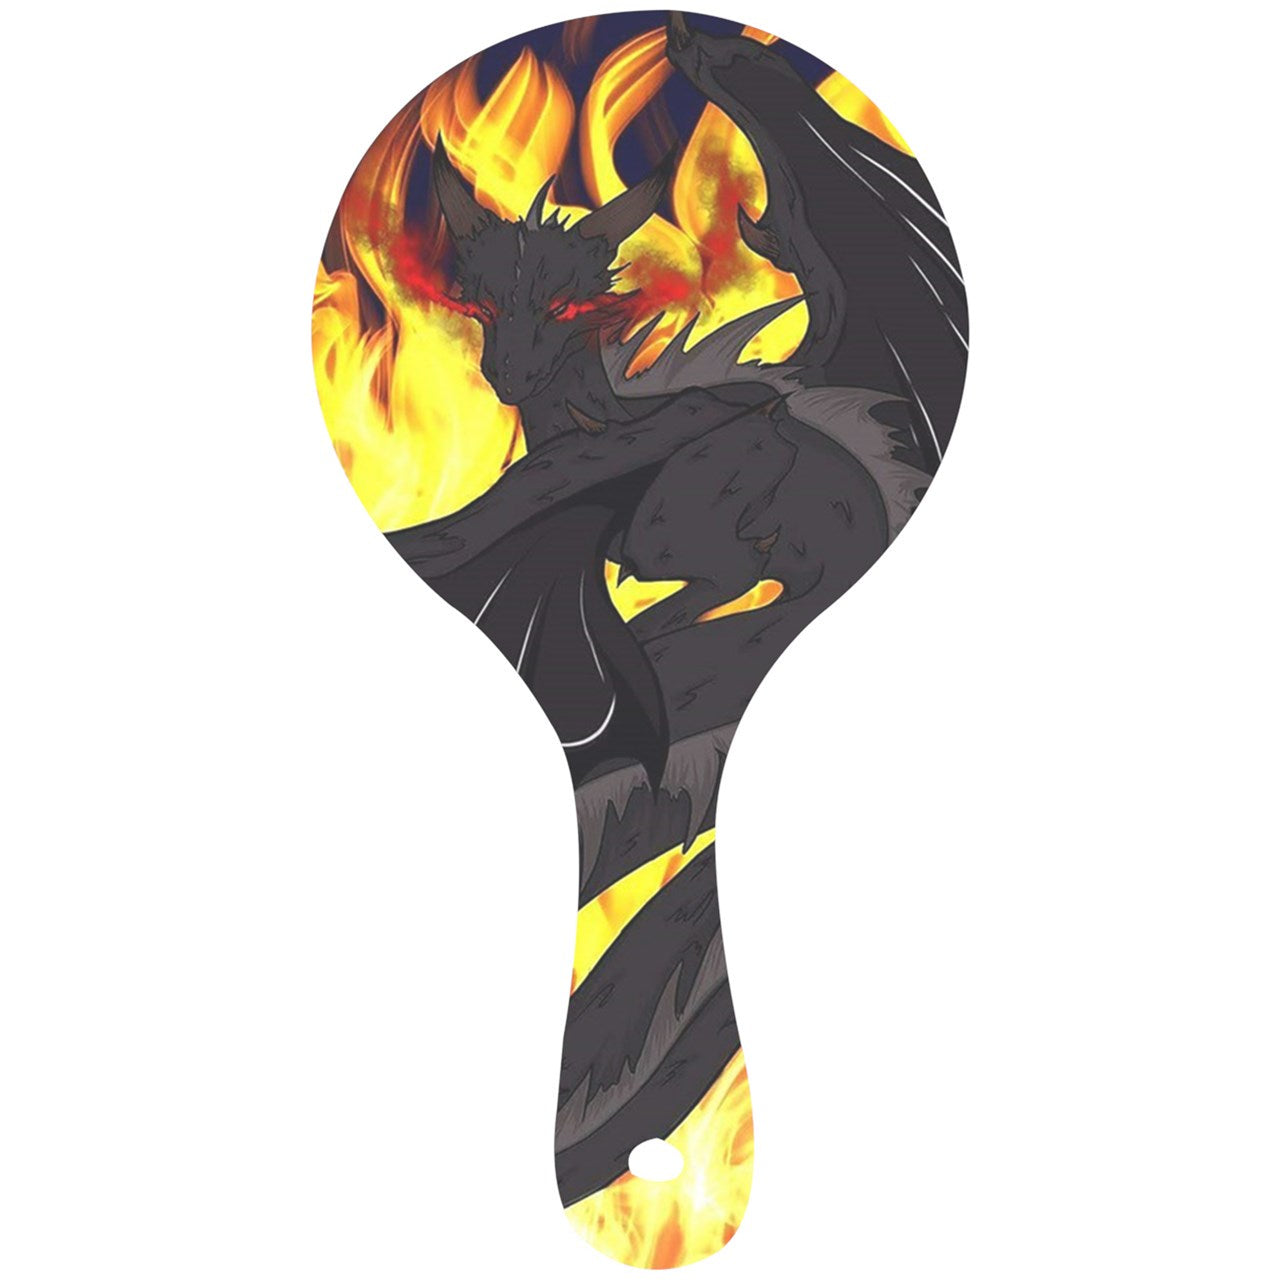 Dragon Torrick - "Flame" - Mini Wooden Mirror